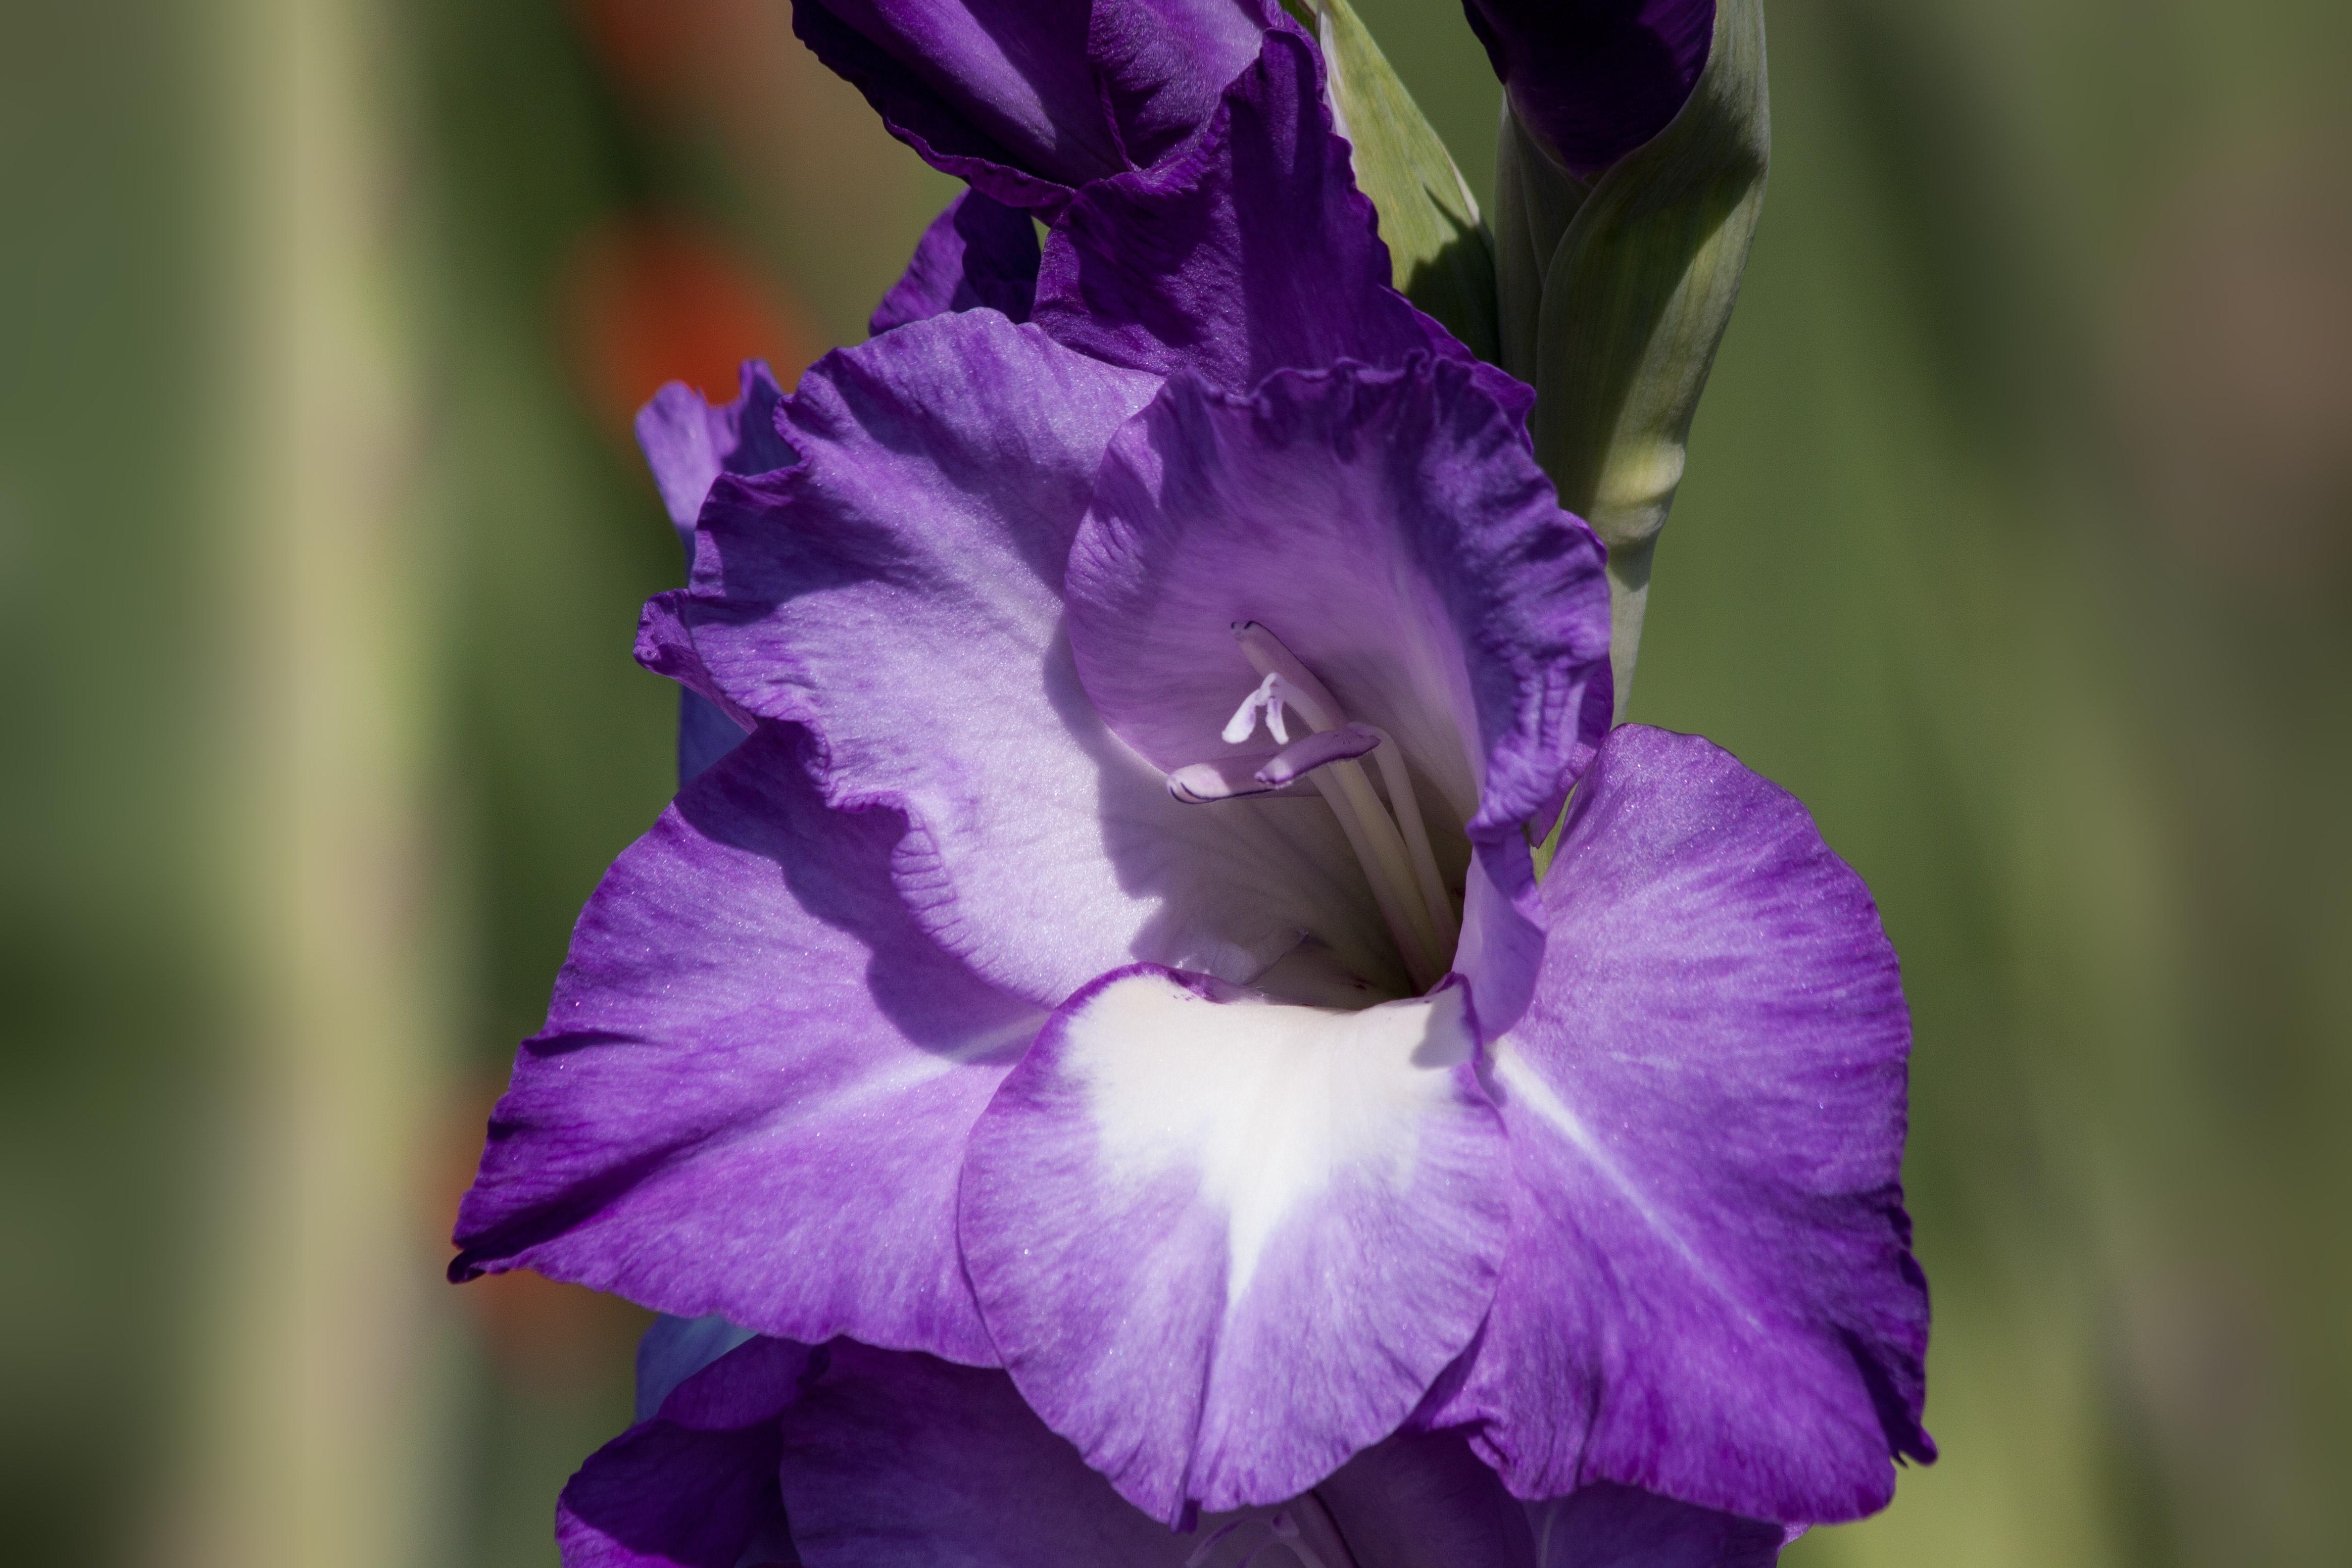 purple gladiolus flower in bloom during daytime free image